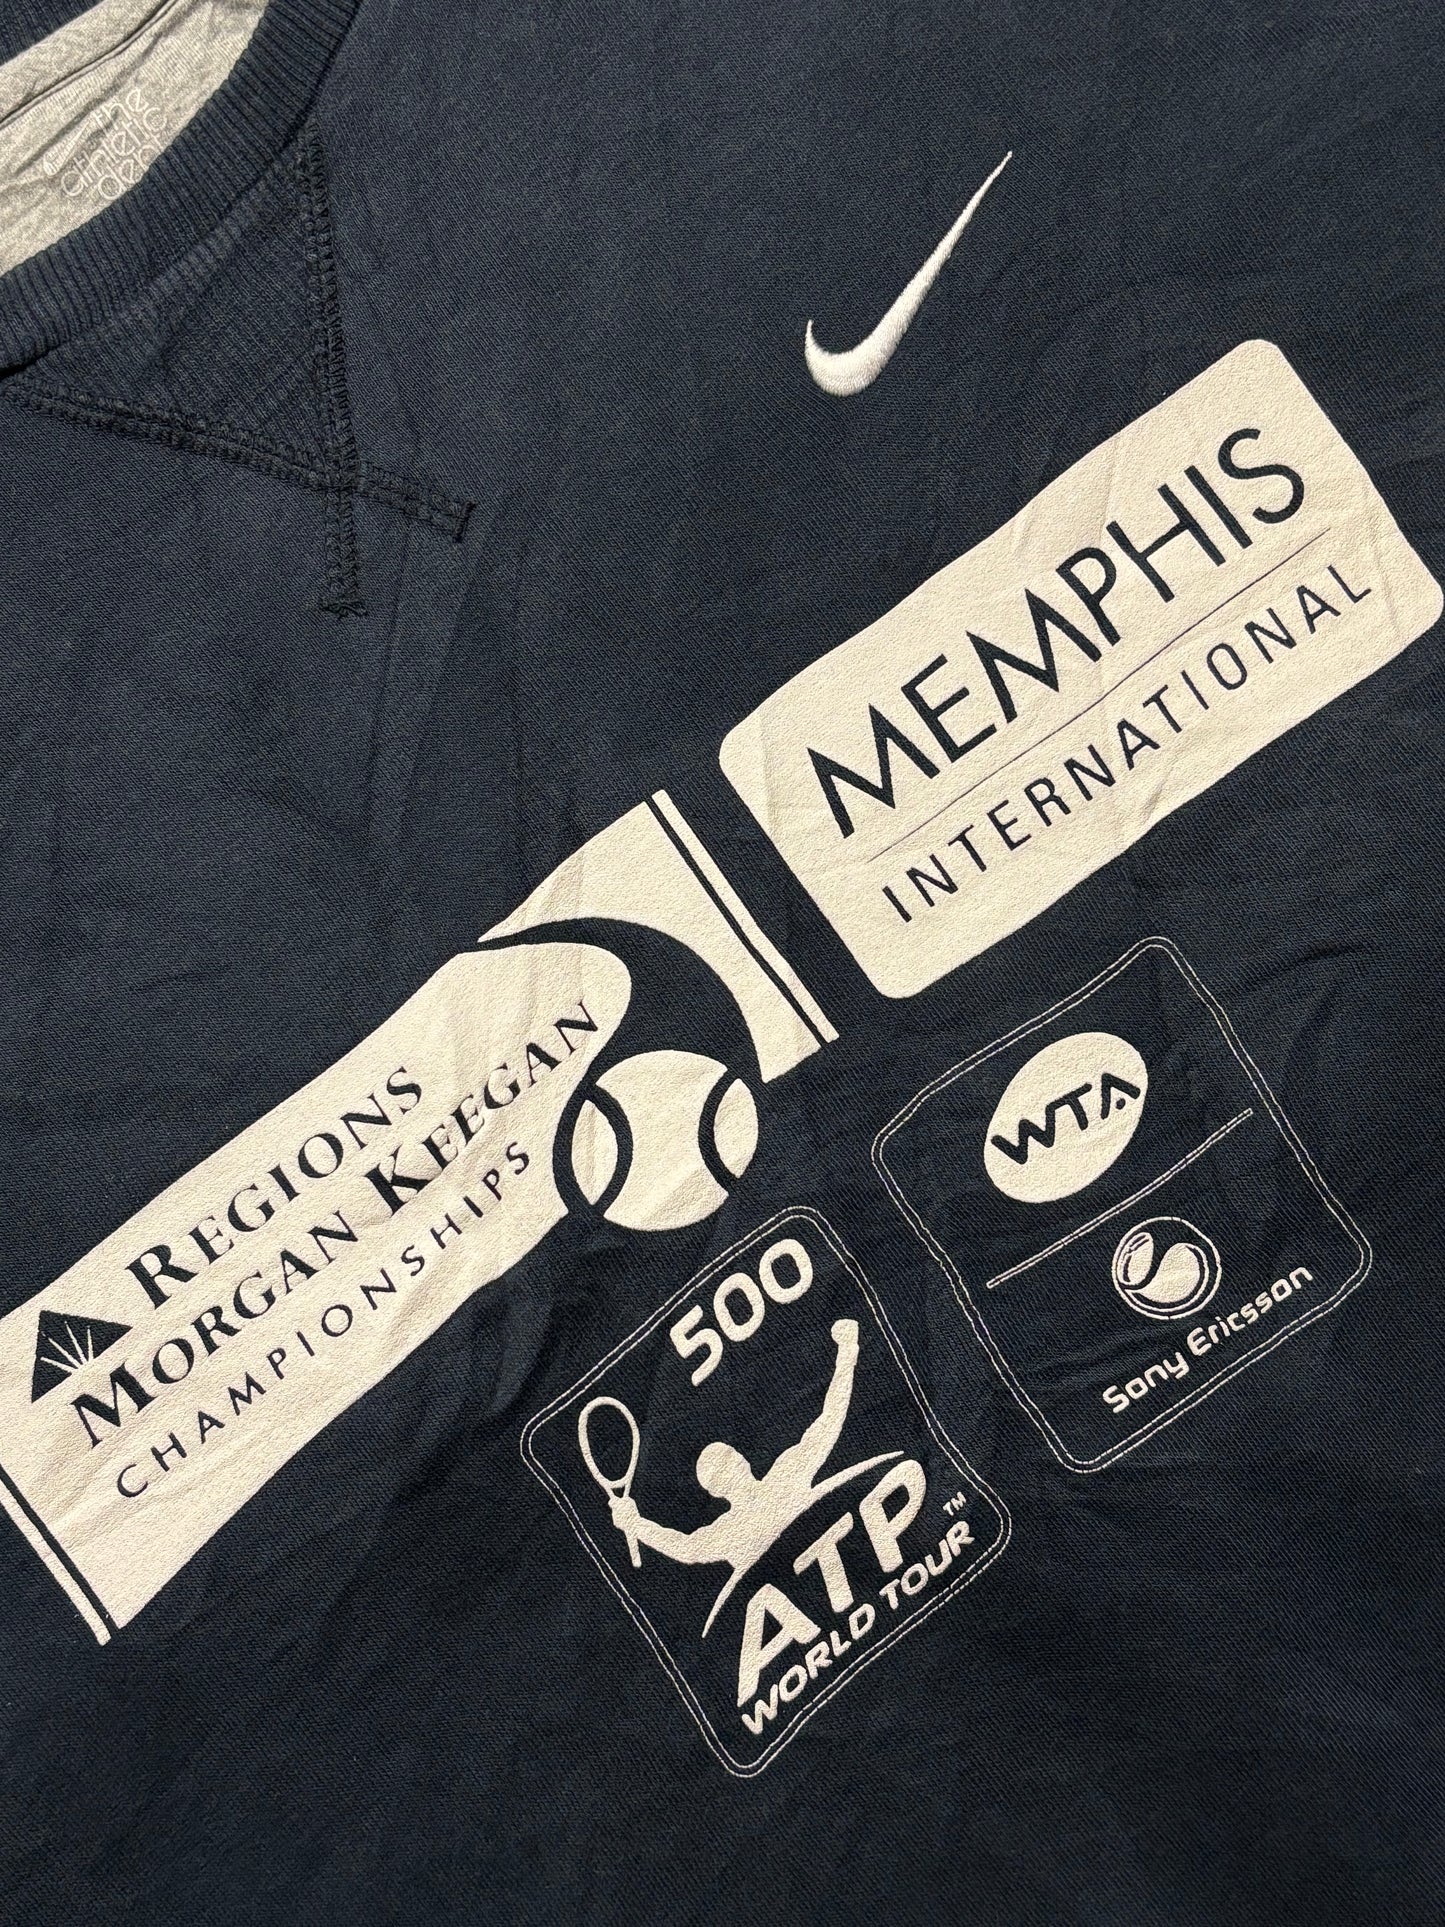 Sudadera Nike ATP Memphips 00s USA - Large